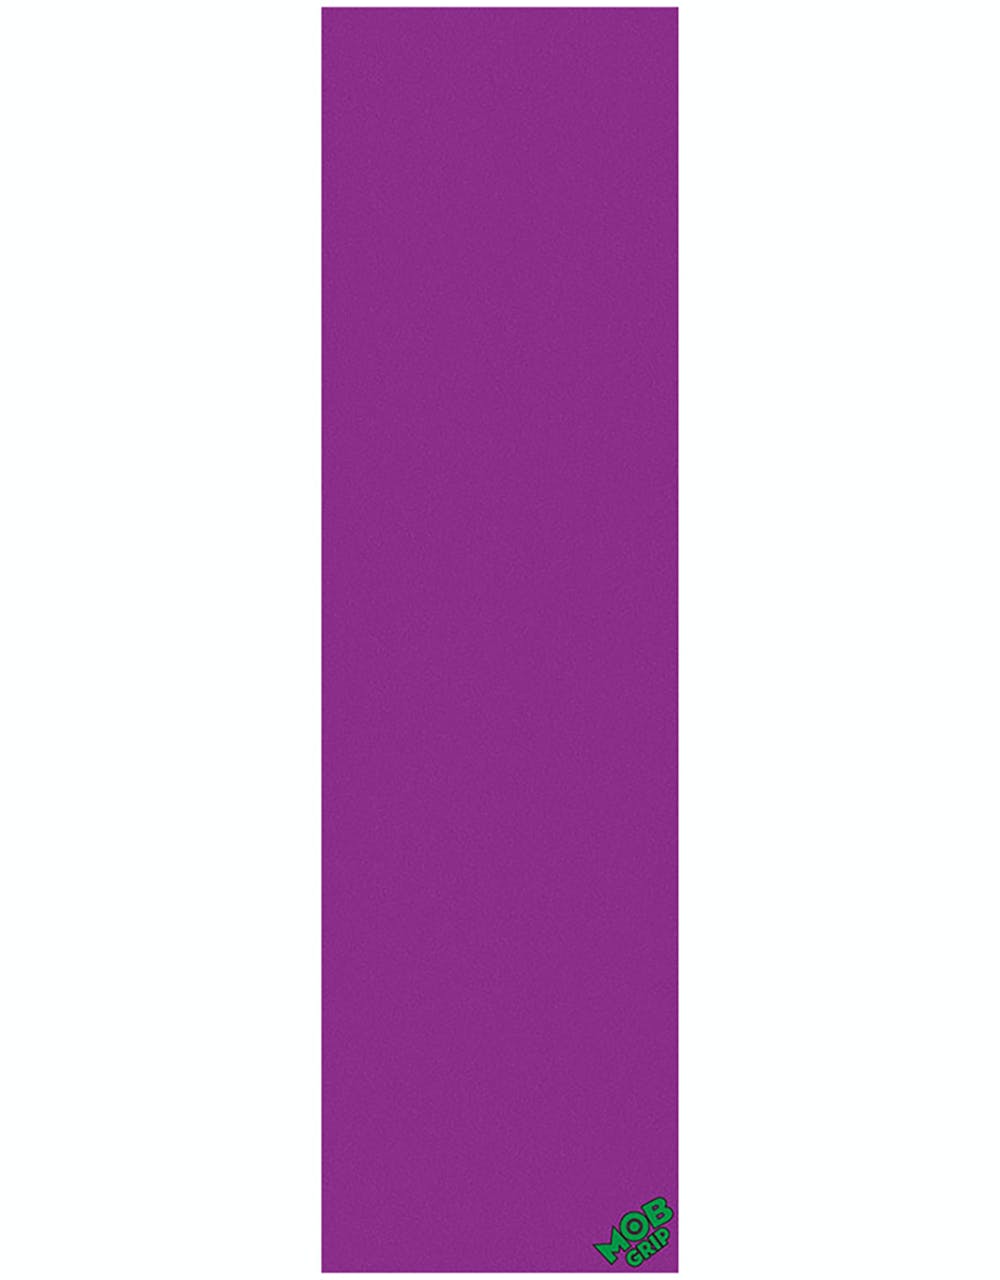 MOB 9" Grip Tape Sheet - Purple